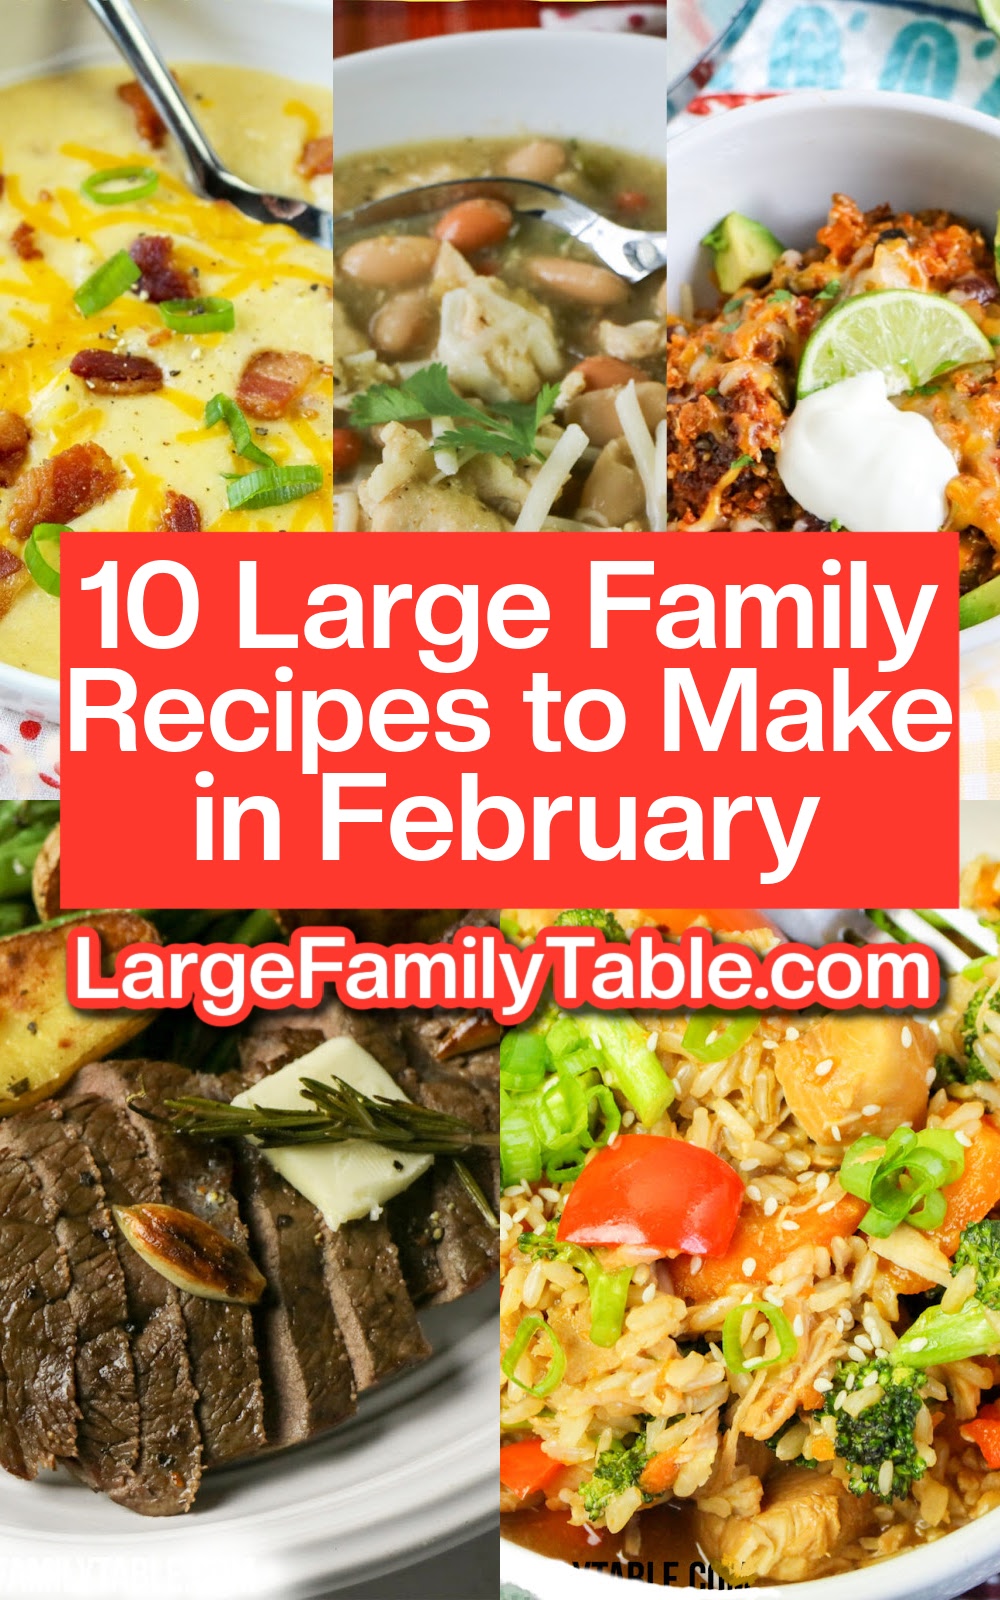 10 LargeFamily Recipes to Make in February